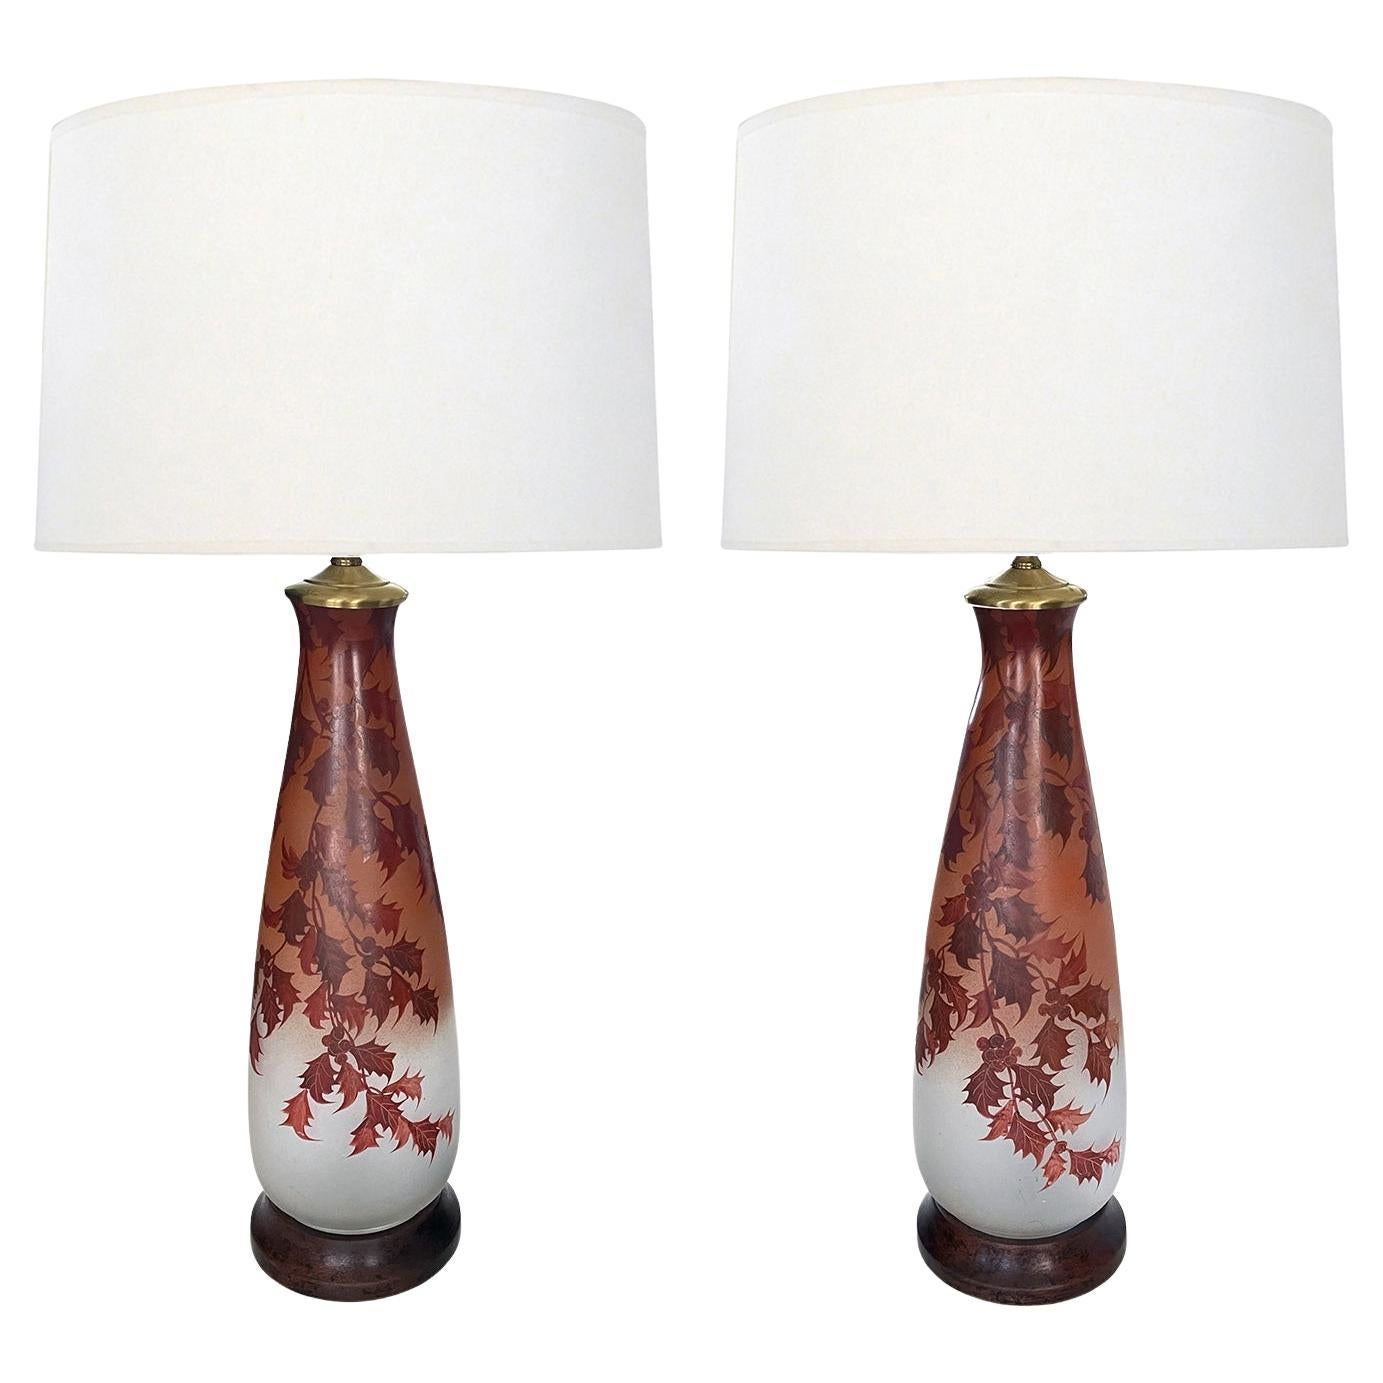 Large Pair of French Leune / Daum Enameled Vases as Lamps; Signed Leune